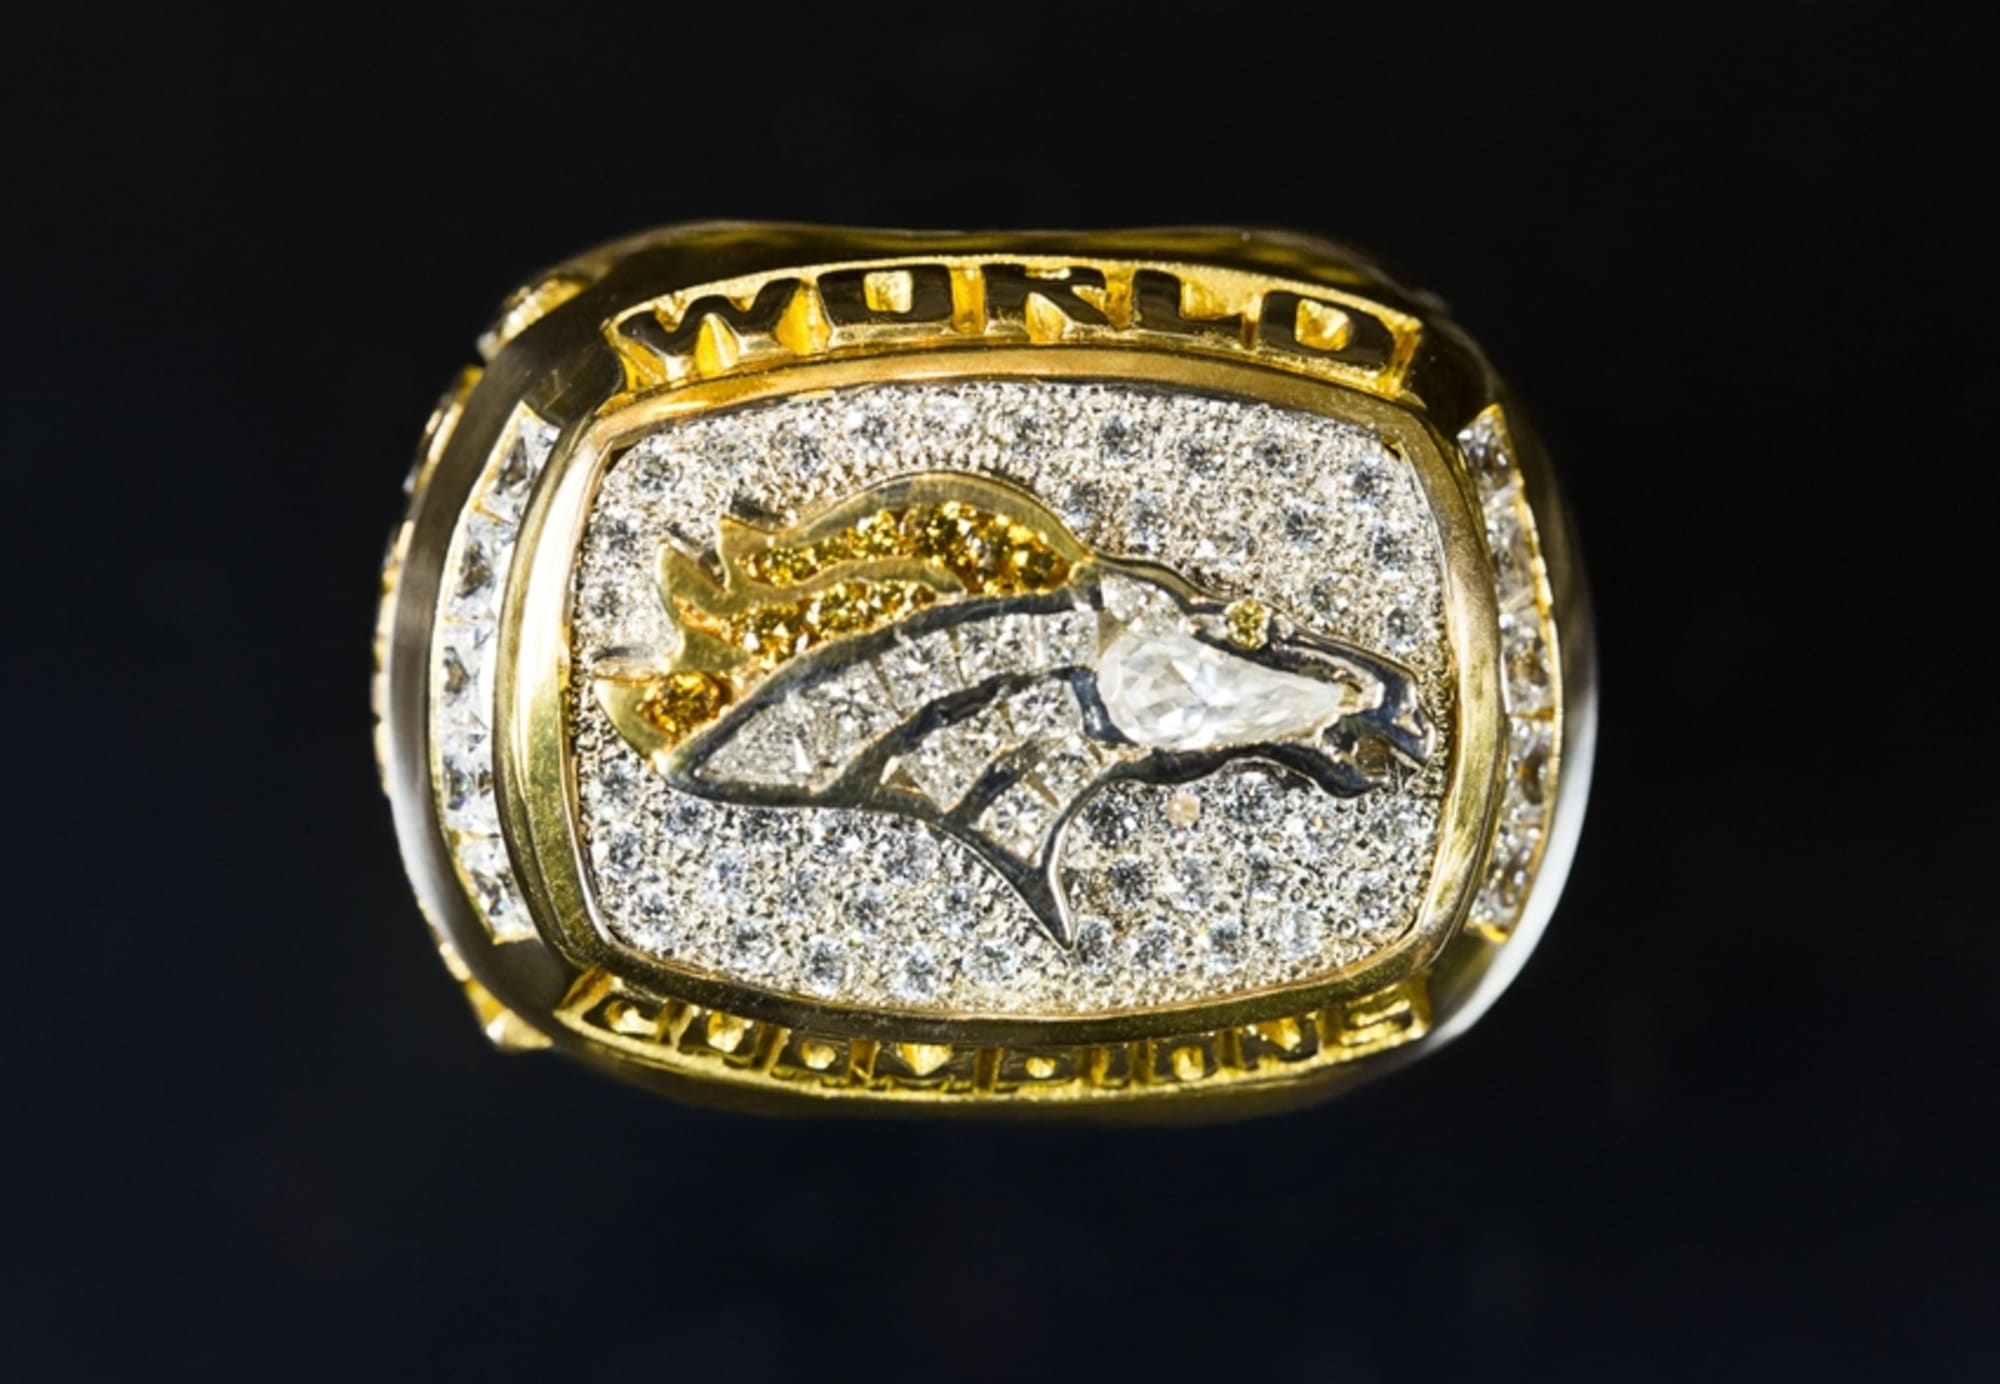 Super Bowl ring earns quick respect – The Denver Post